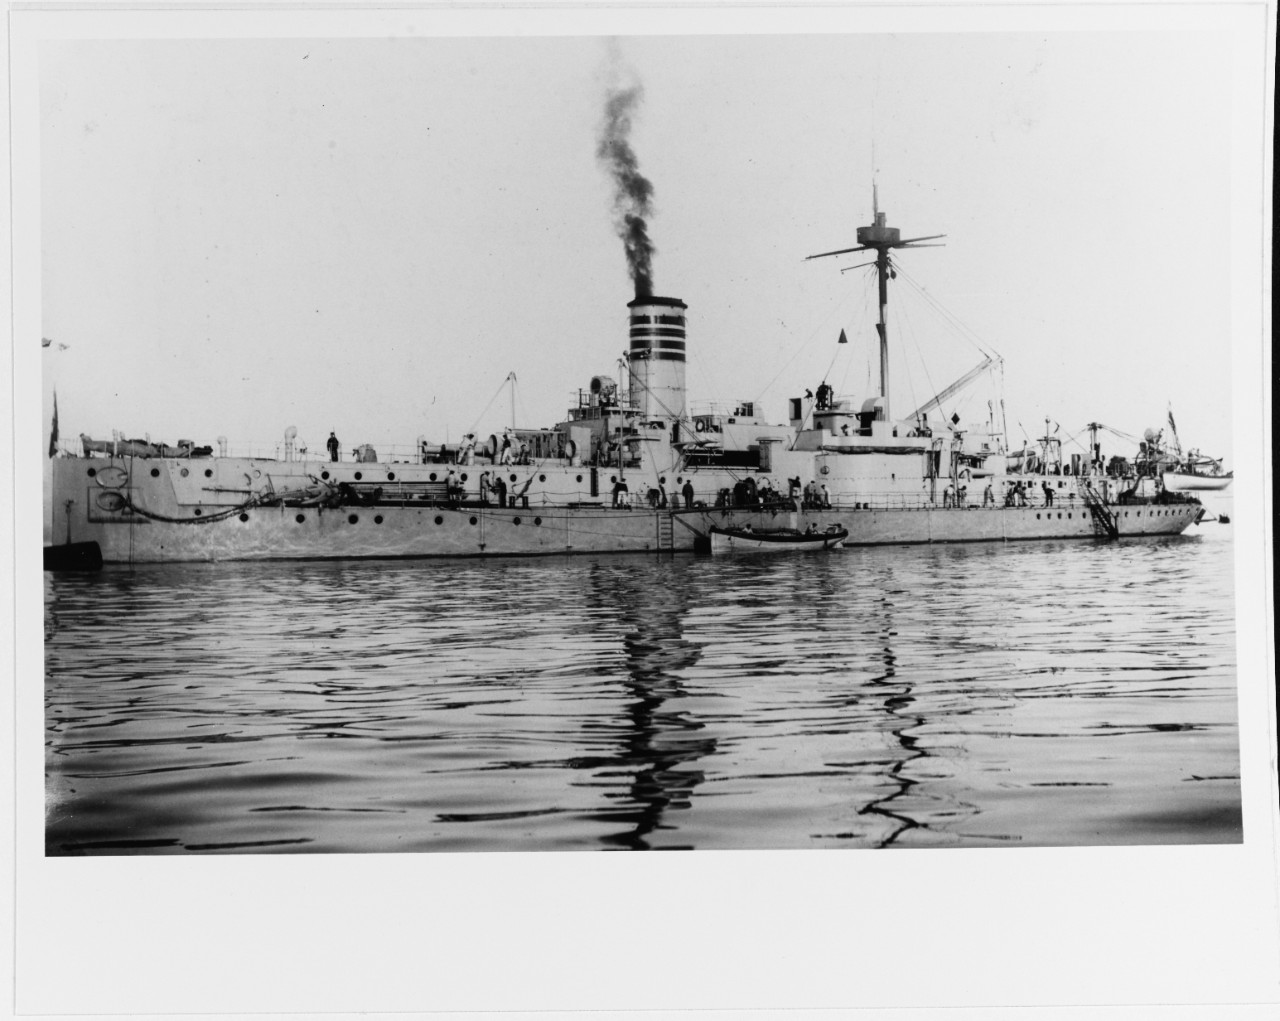 SACHSEN (German battleship, 1877-1910)